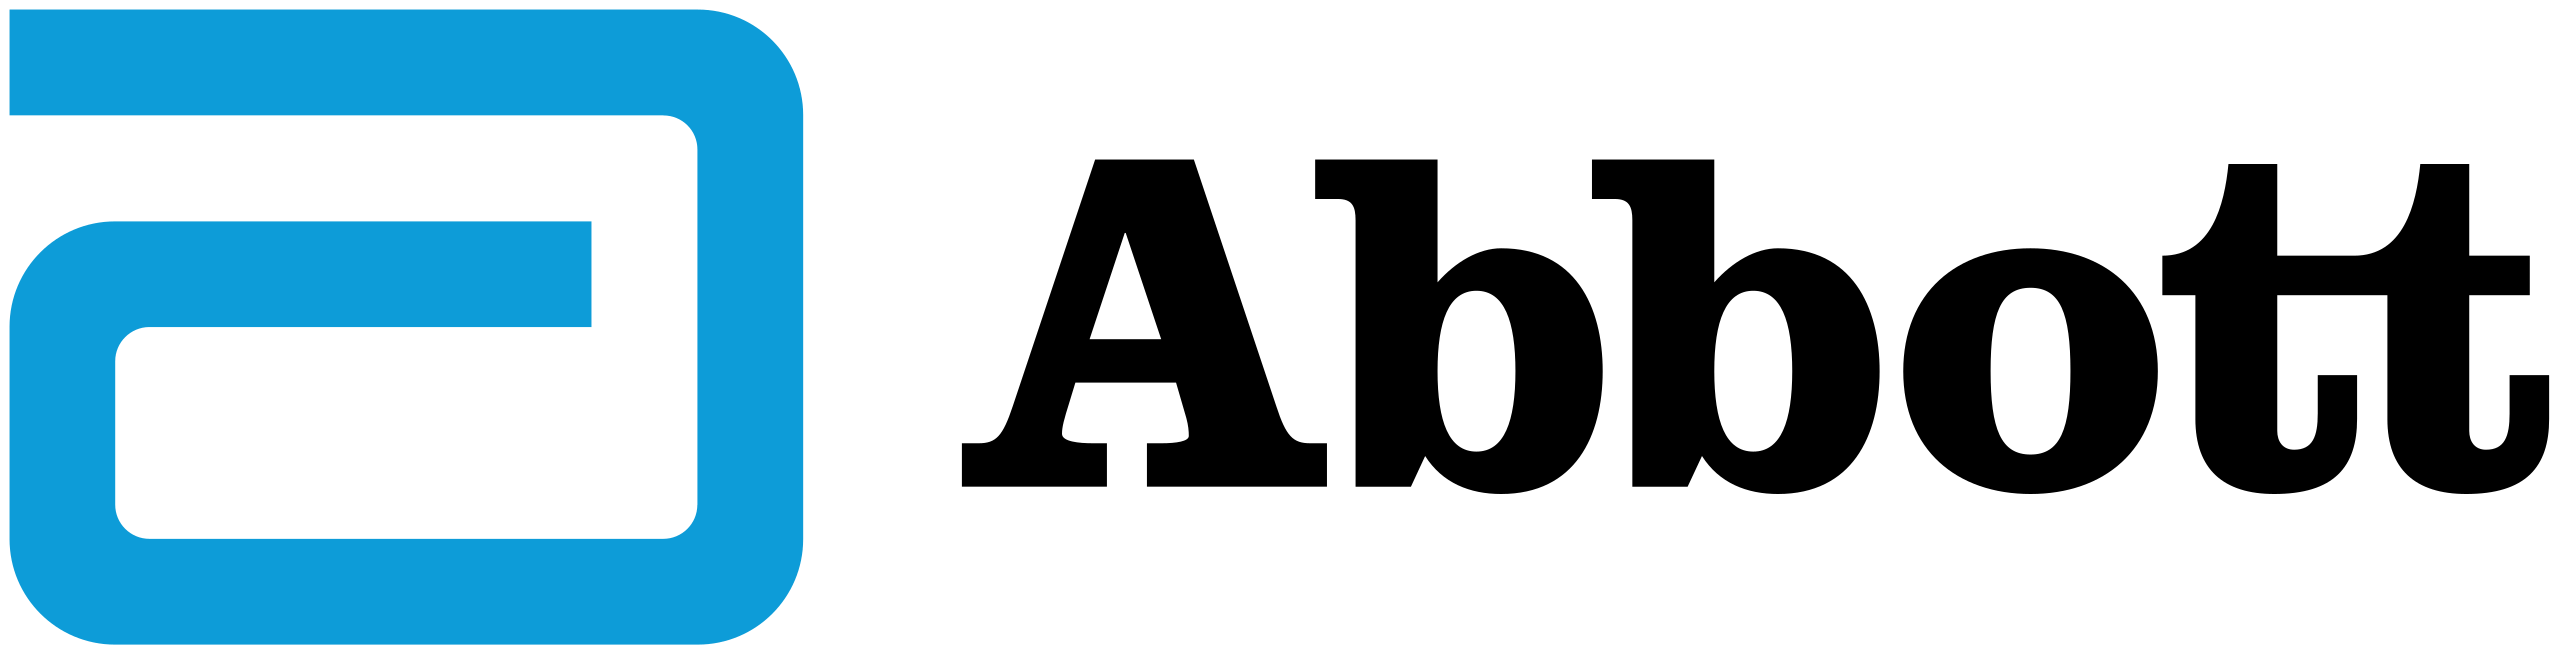 Abbott_Laboratories_logo